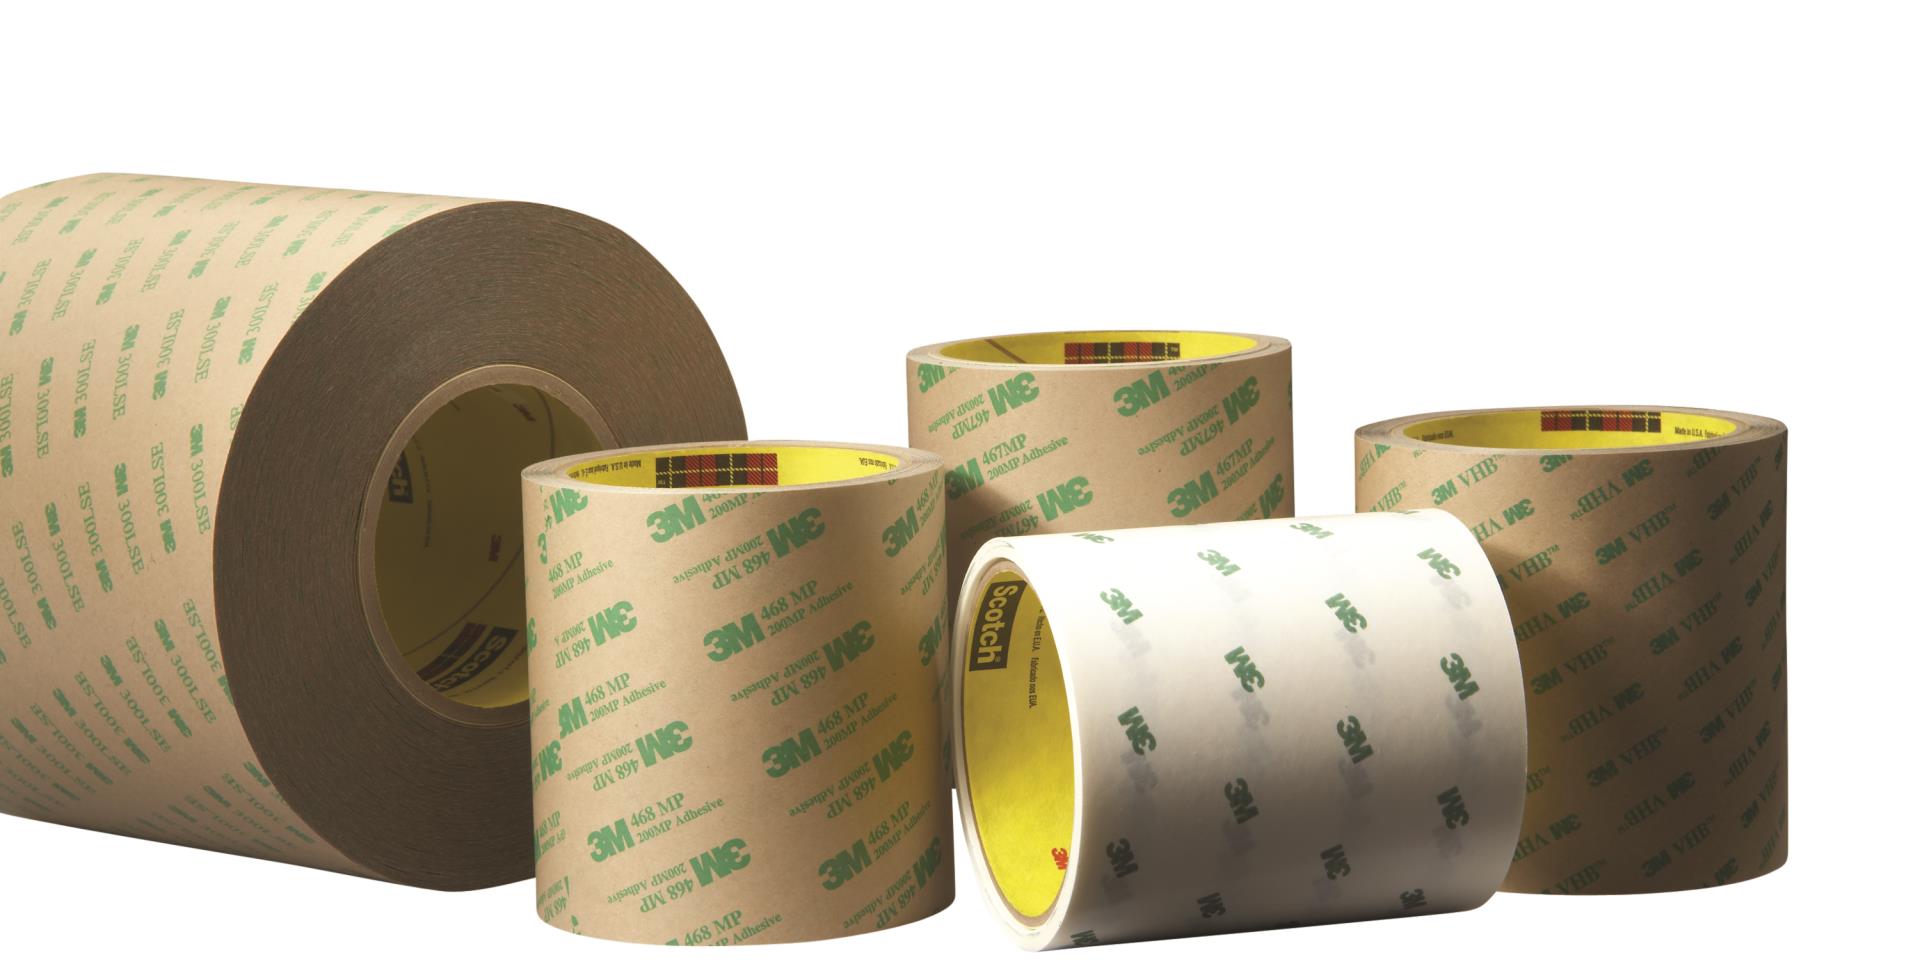 1 Roll 3M Green Masking Tape 7.30 mil Thick x 48mm x 55m 401+ 